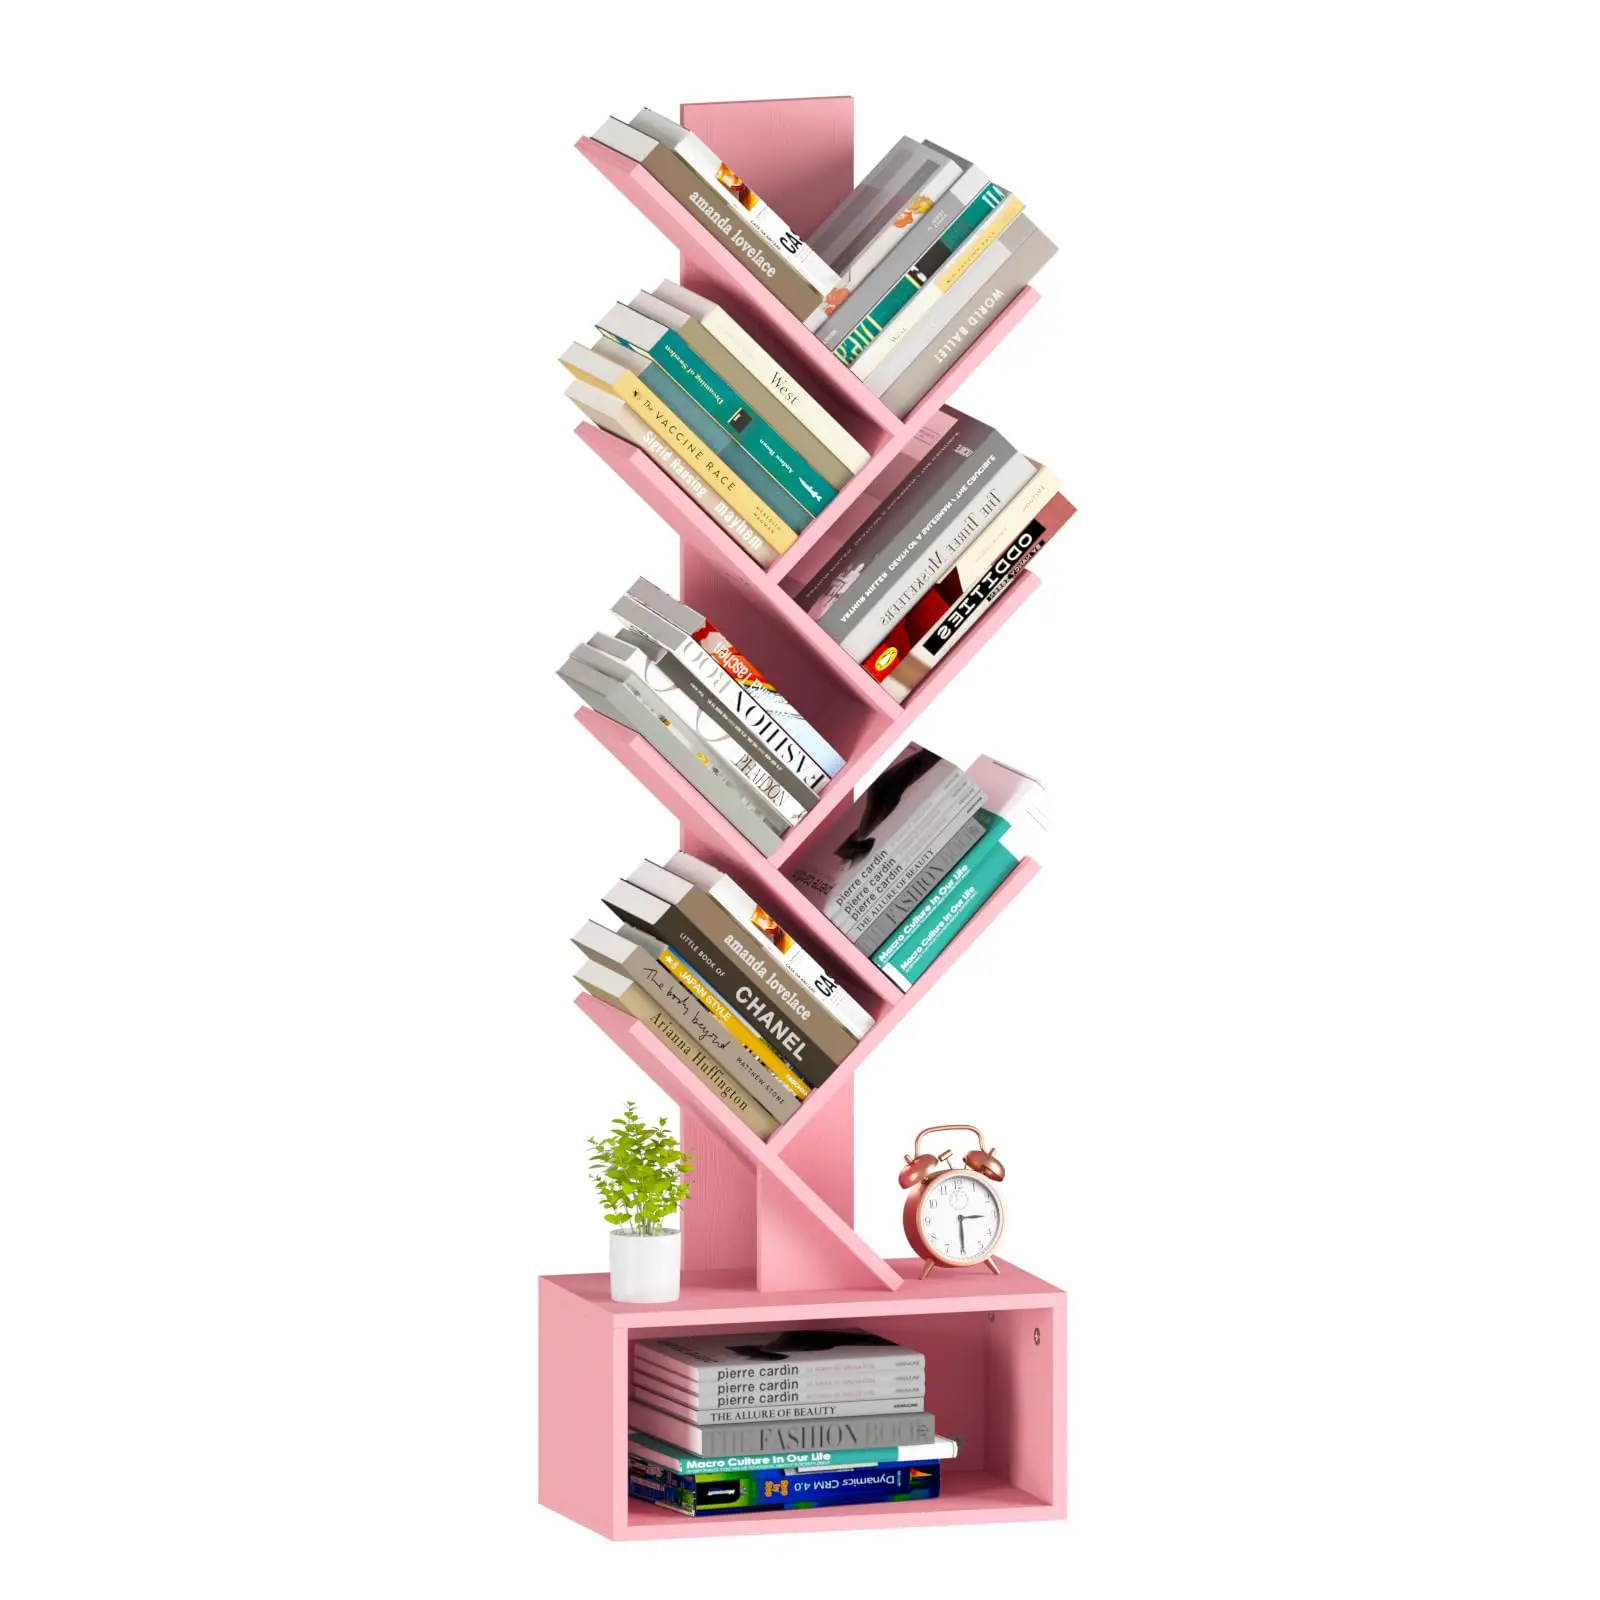 

Tree Bookshelf - 6 Shelf Retro Floor Standing Bookcase, Tall Wood Book Storage Rack for CDs/Movies/Books, Pink